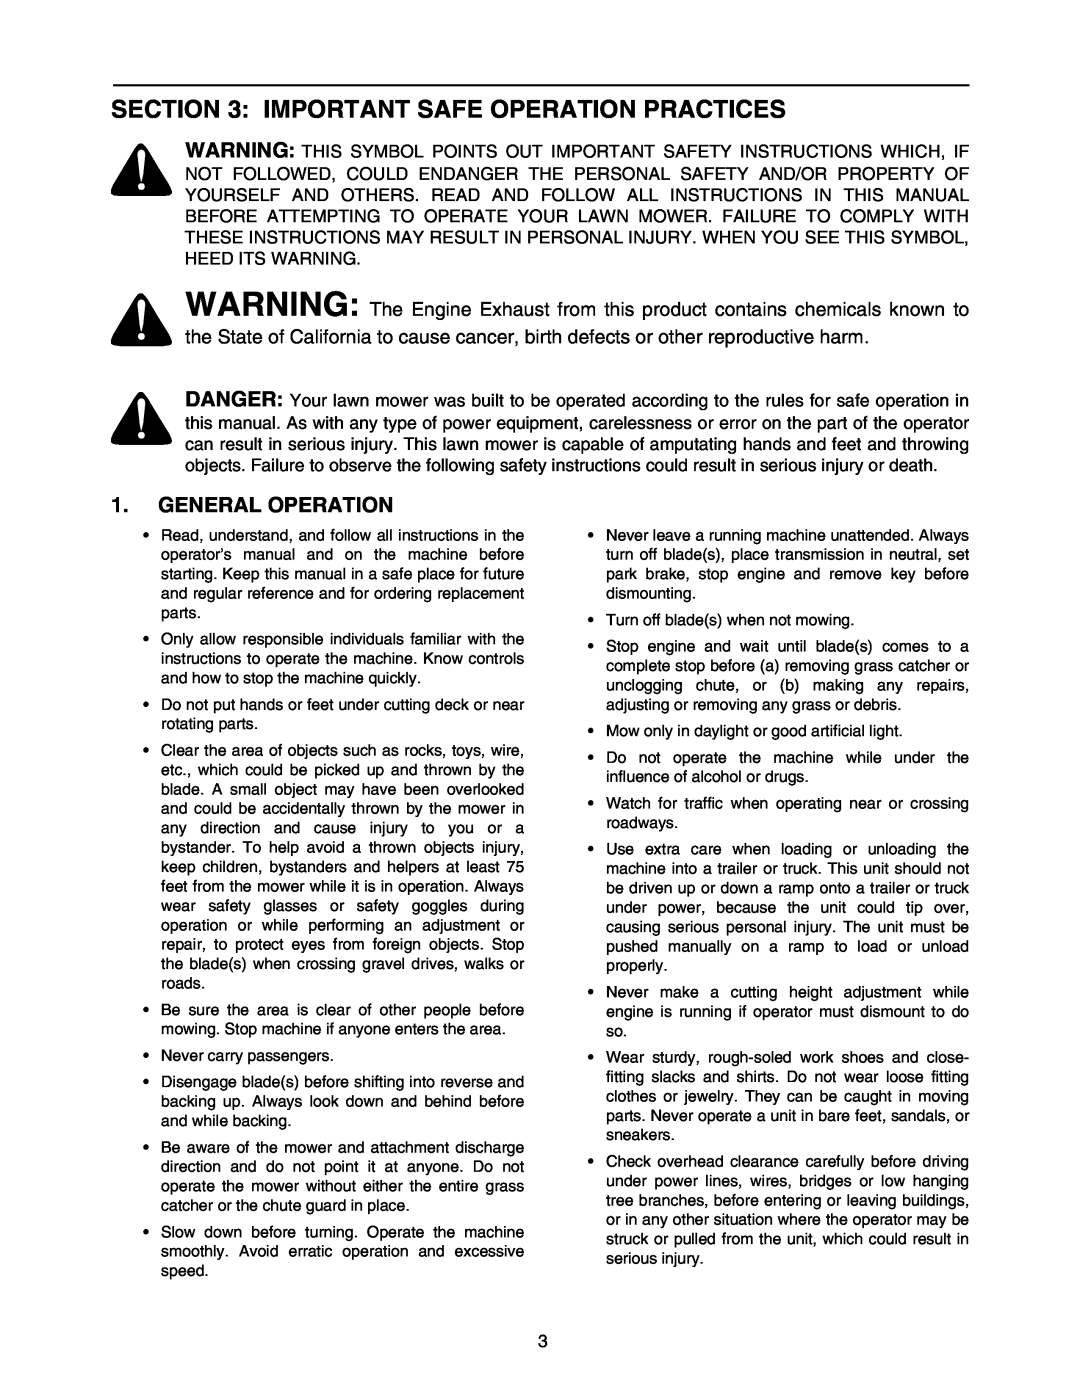 Bolens OEM-190-821 manual Important Safe Operation Practices, General Operation 